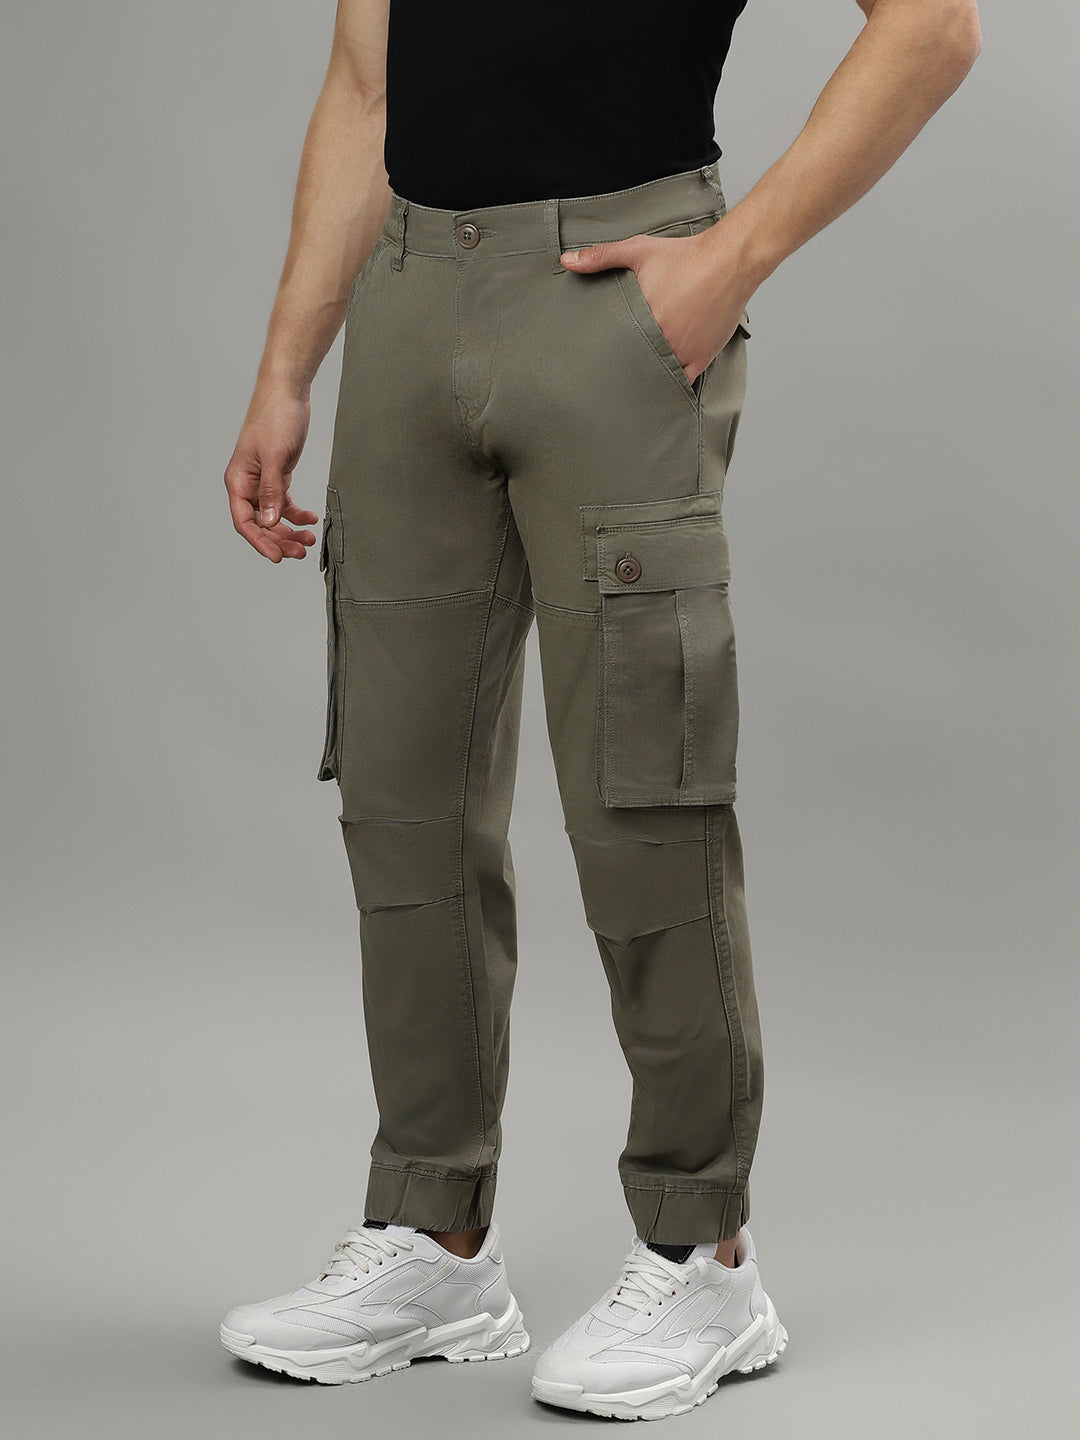 Men Slim Fit Cargo Jeans at Rs 595/piece | New Delhi | ID: 25277404530